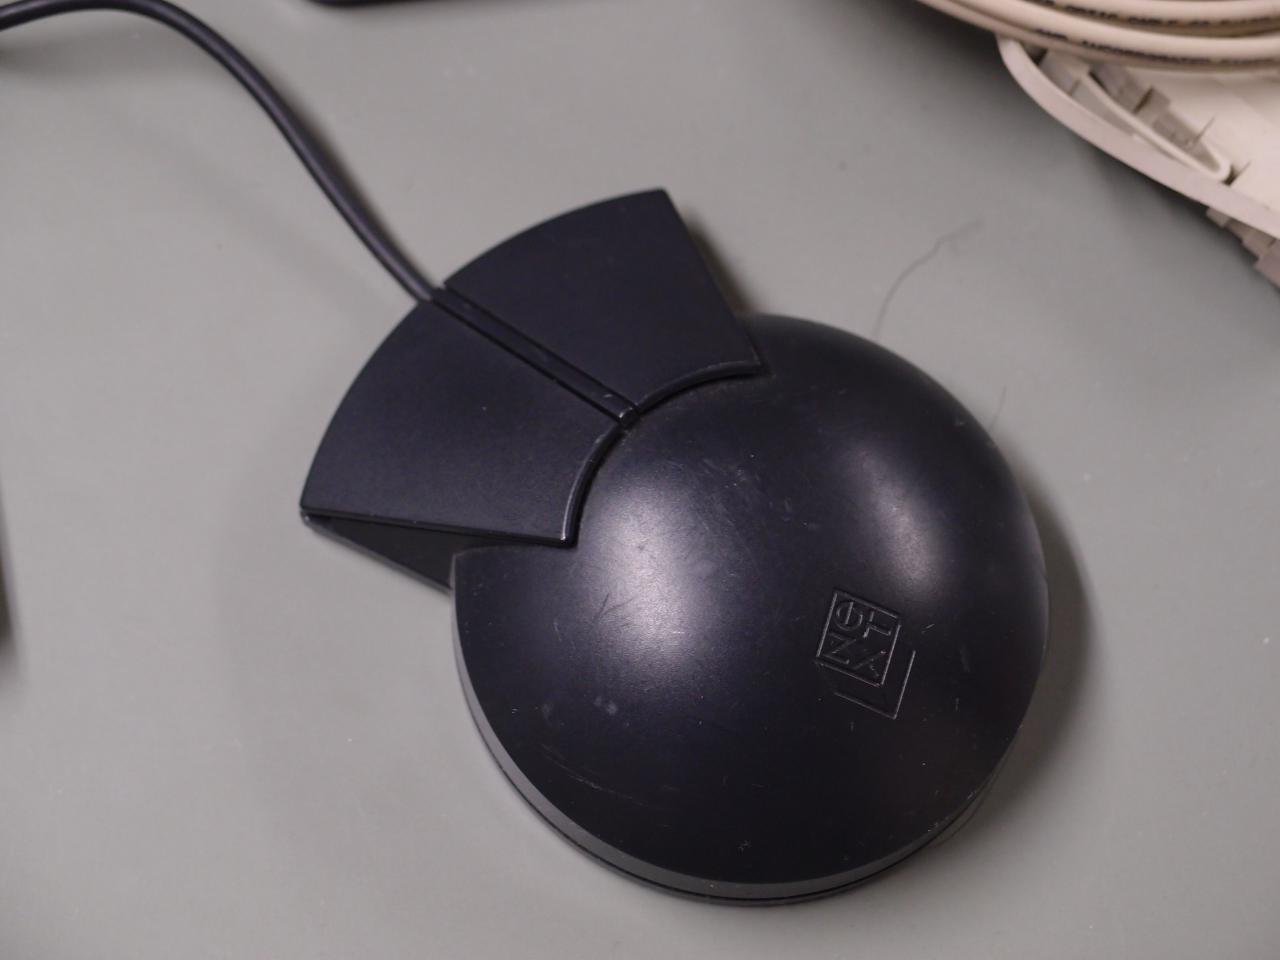 NeXT adb mouse 37064